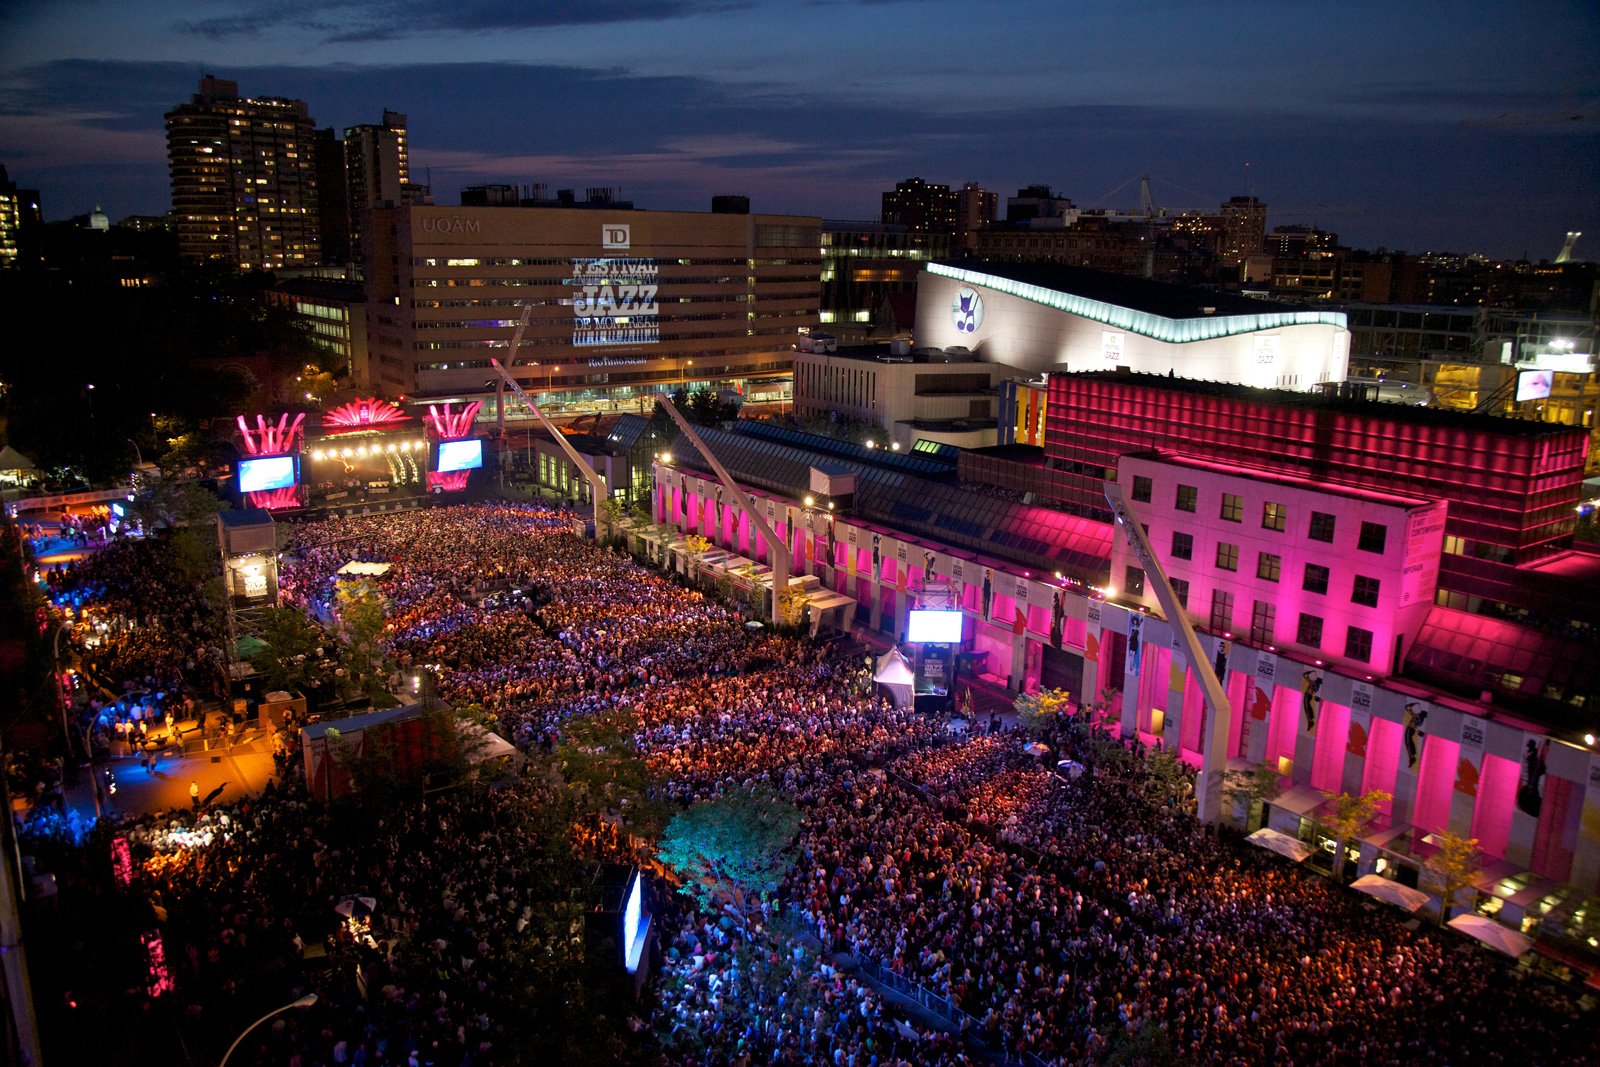 The Montreal International Jazz Festival